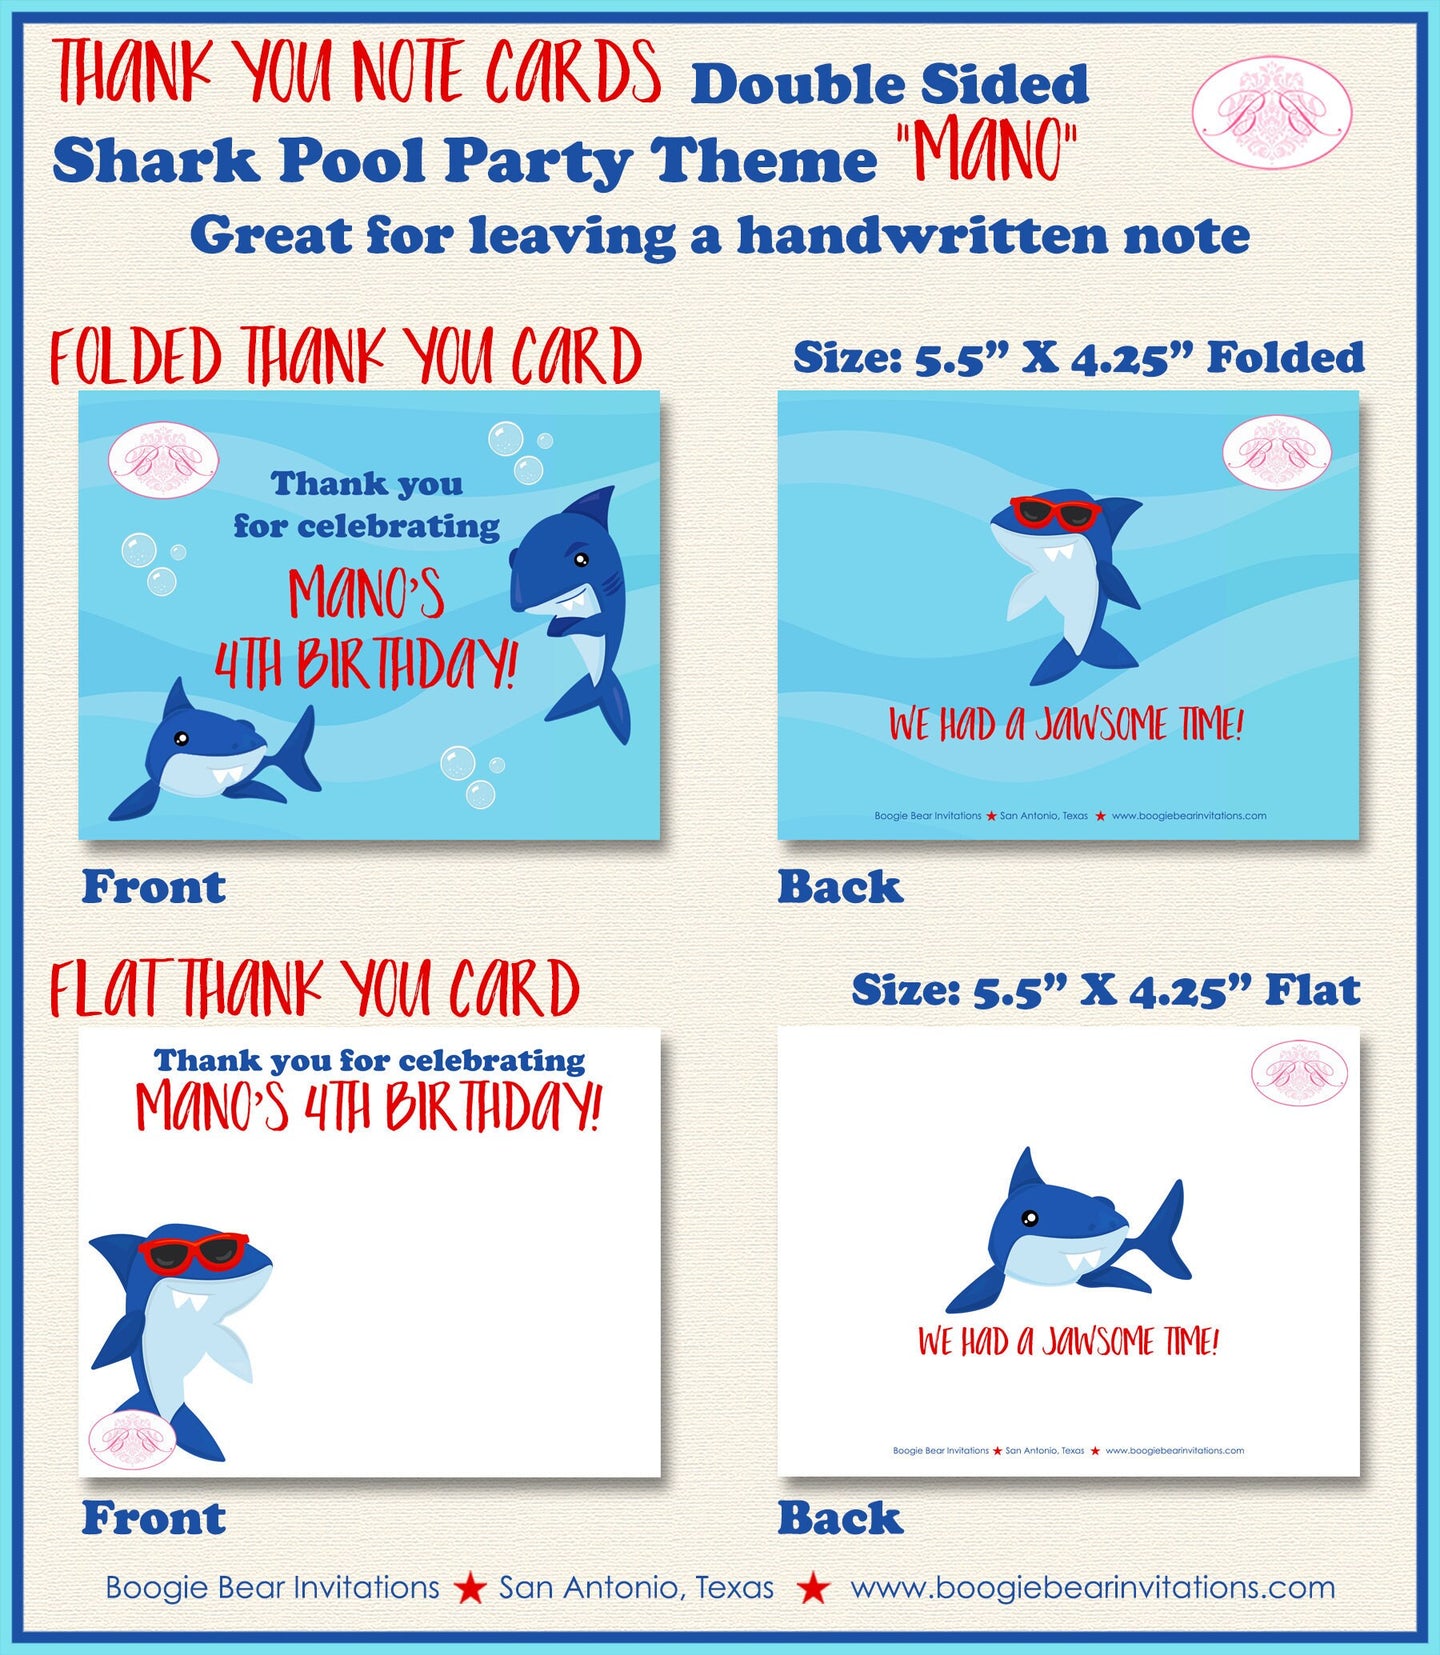 Shark Pool Birthday Party Thank You Card Swimming Ocean Beach Blue Red Fish Swim Surf Wave Splash Boogie Bear Invitations Mano Theme Printed